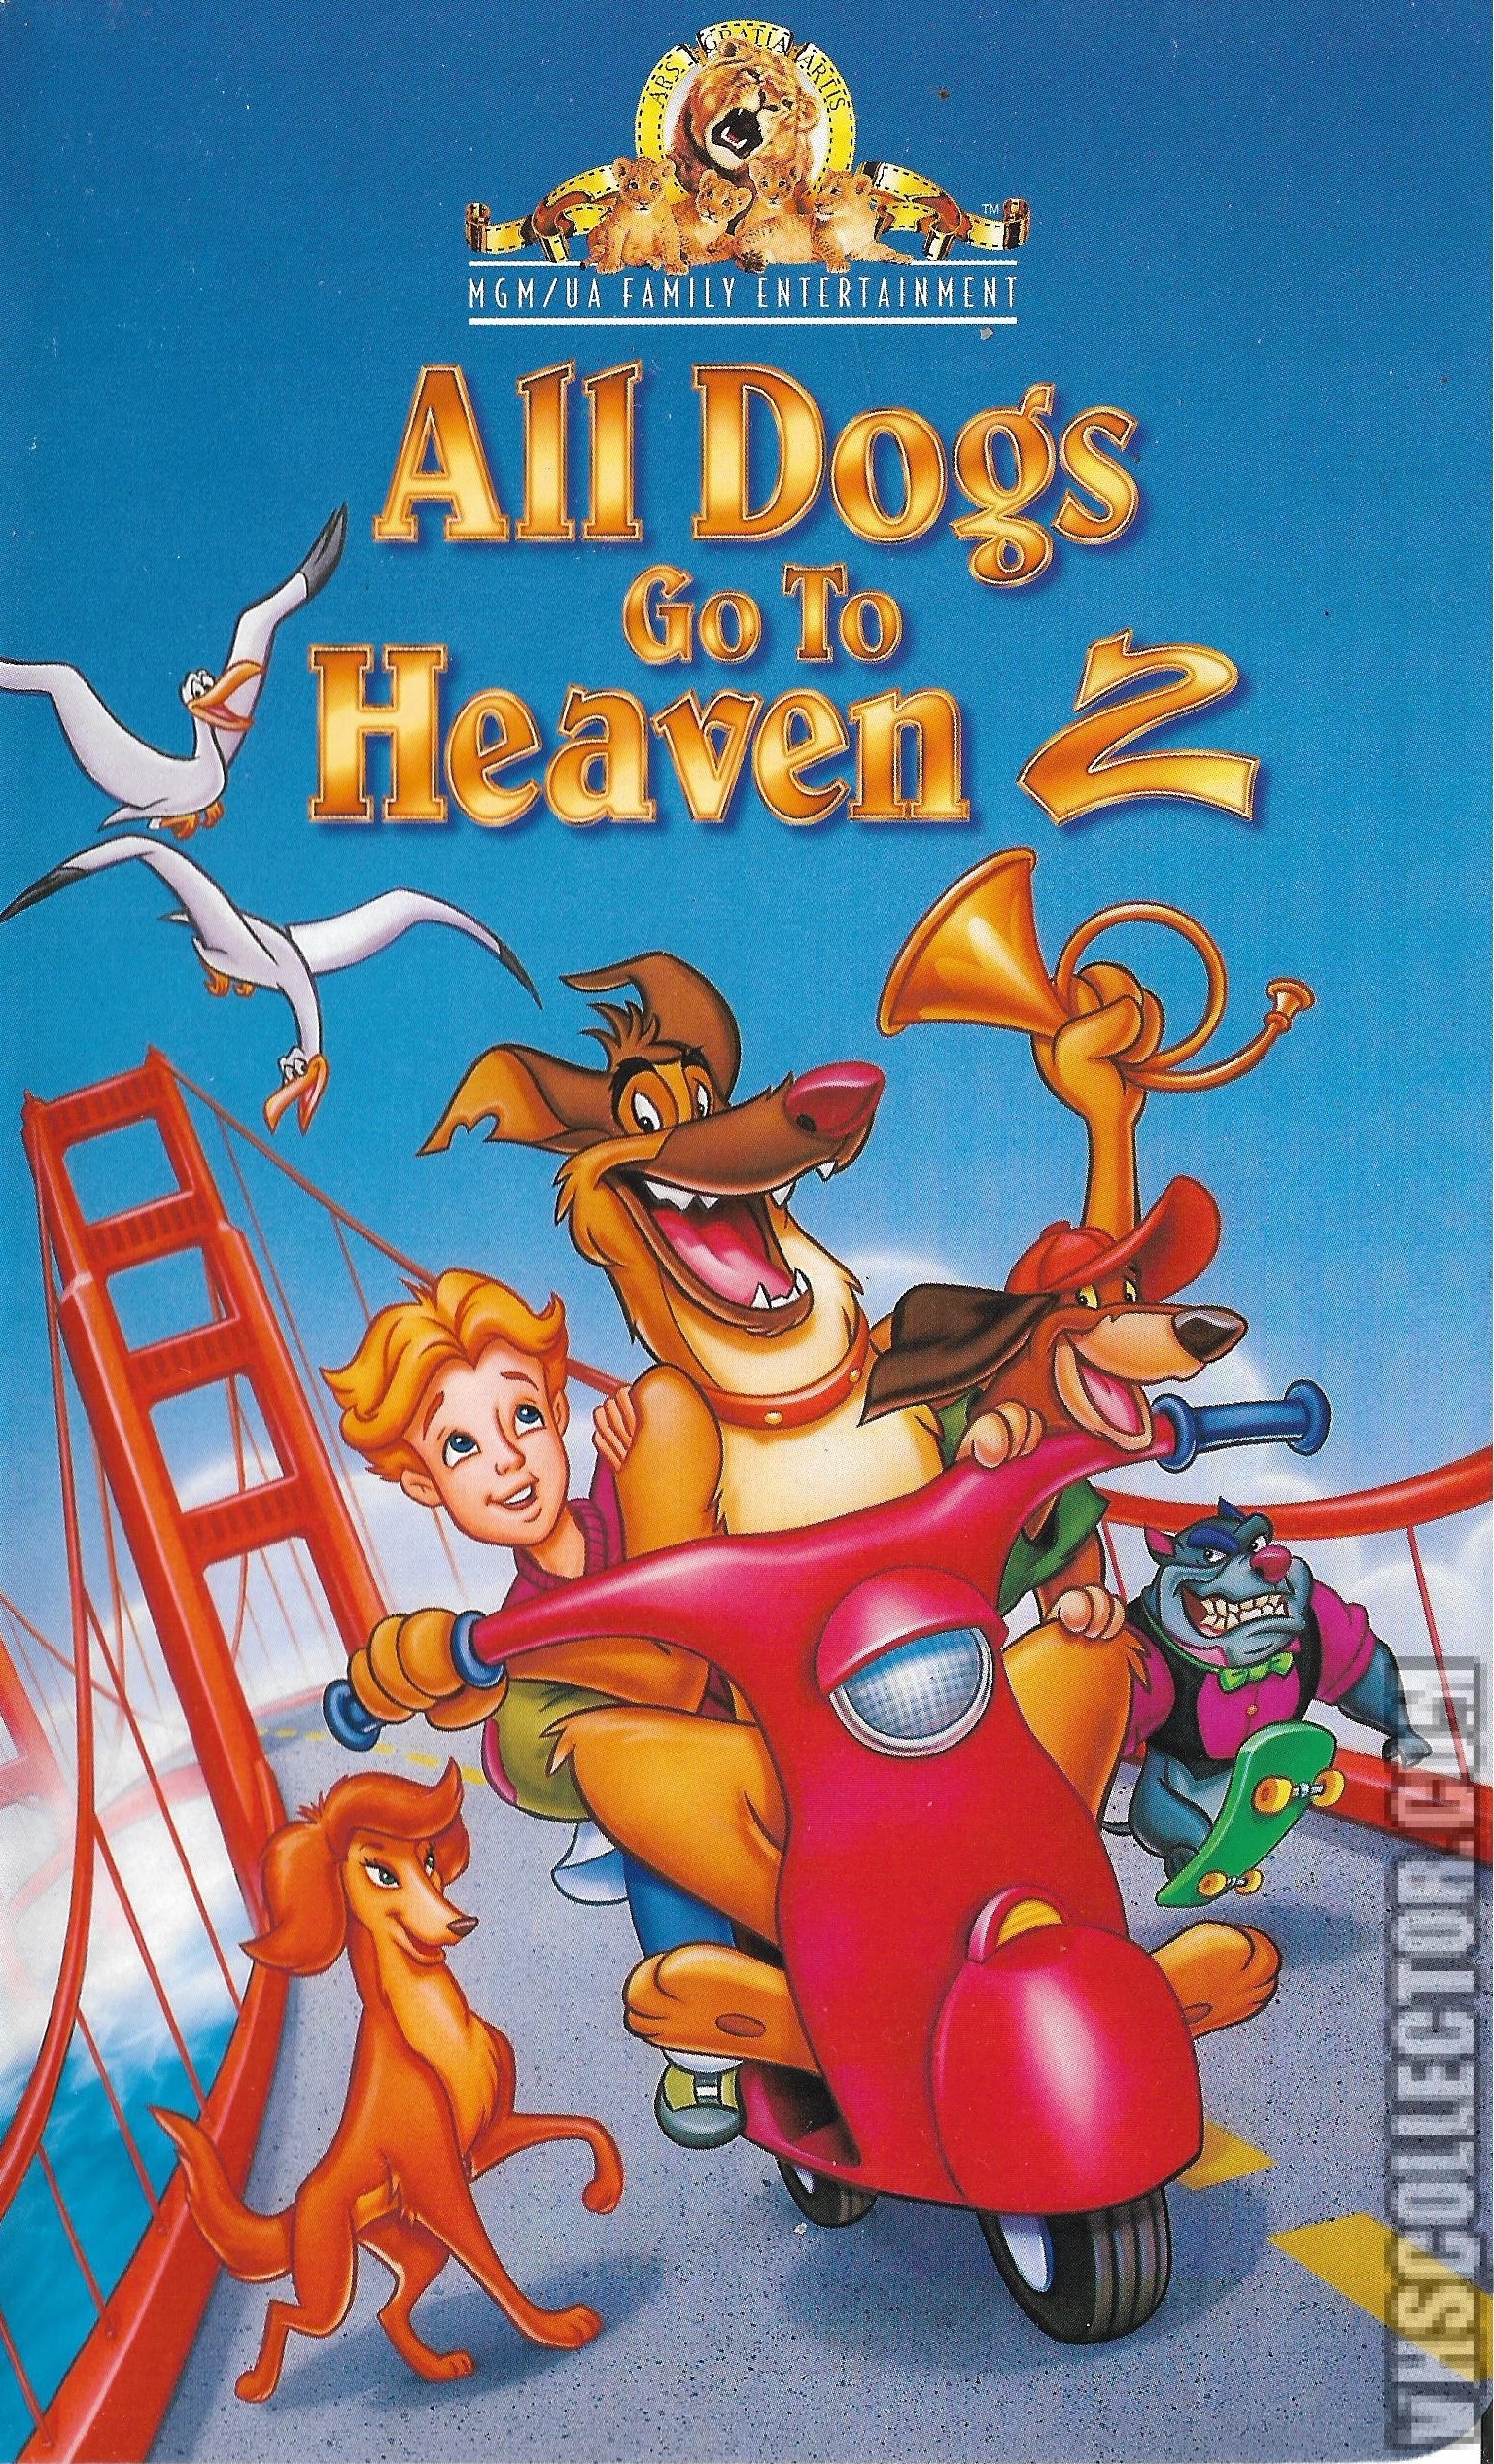 All Dogs Go to Heaven 2/Home media | Moviepedia | Fandom